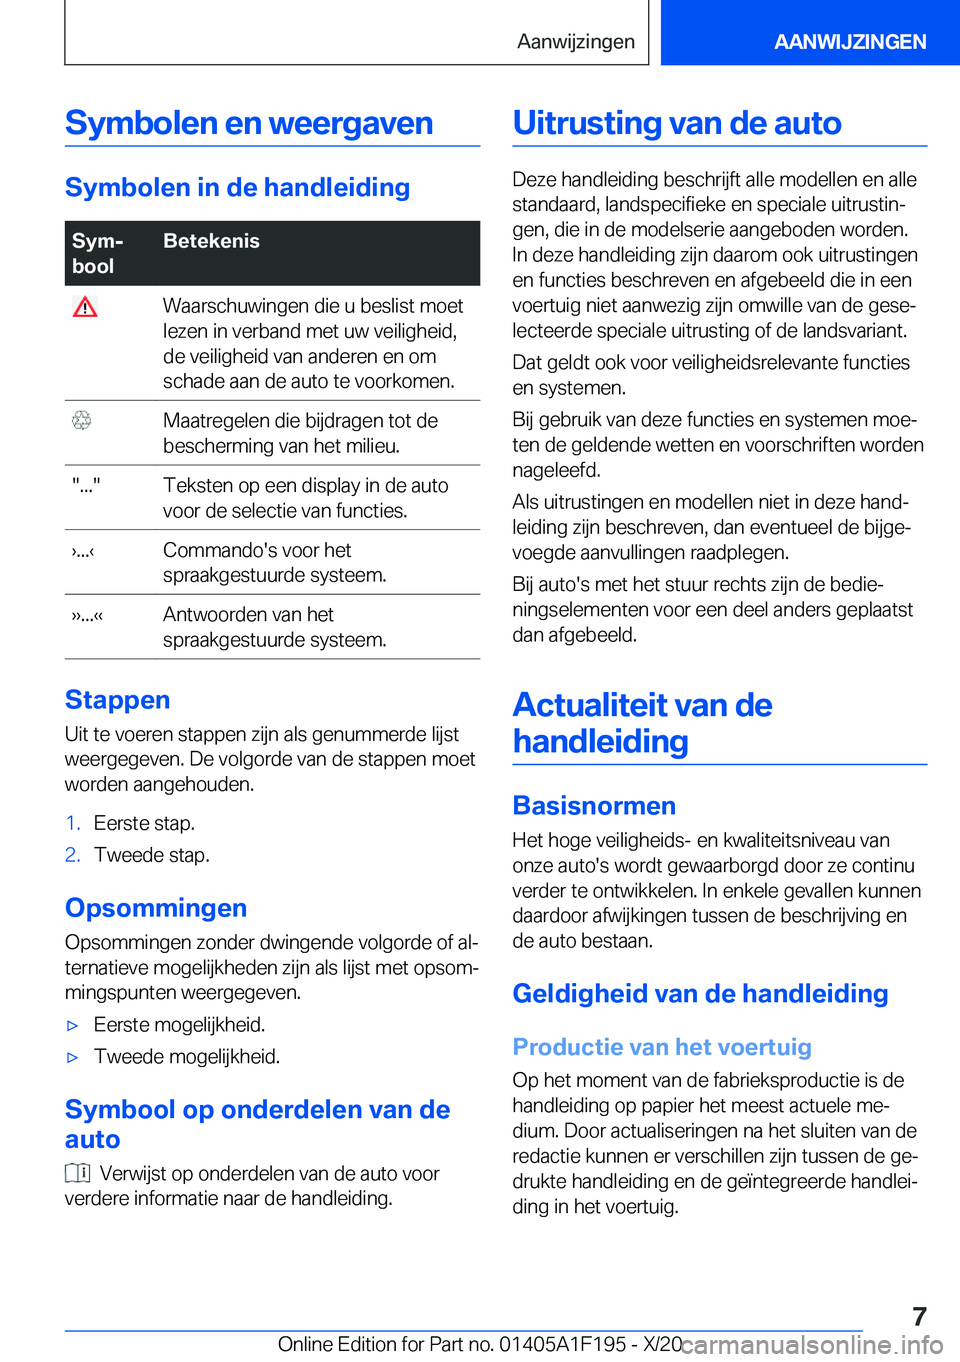 BMW M5 2021  Instructieboekjes (in Dutch) �S�y�m�b�o�l�e�n��e�n��w�e�e�r�g�a�v�e�n
�S�y�m�b�o�l�e�n��i�n��d�e��h�a�n�d�l�e�i�d�i�n�g
�S�y�mj
�b�o�o�l�B�e�t�e�k�e�n�i�s��W�a�a�r�s�c�h�u�w�i�n�g�e�n��d�i�e��u��b�e�s�l�i�s�t��m�o�e�t
